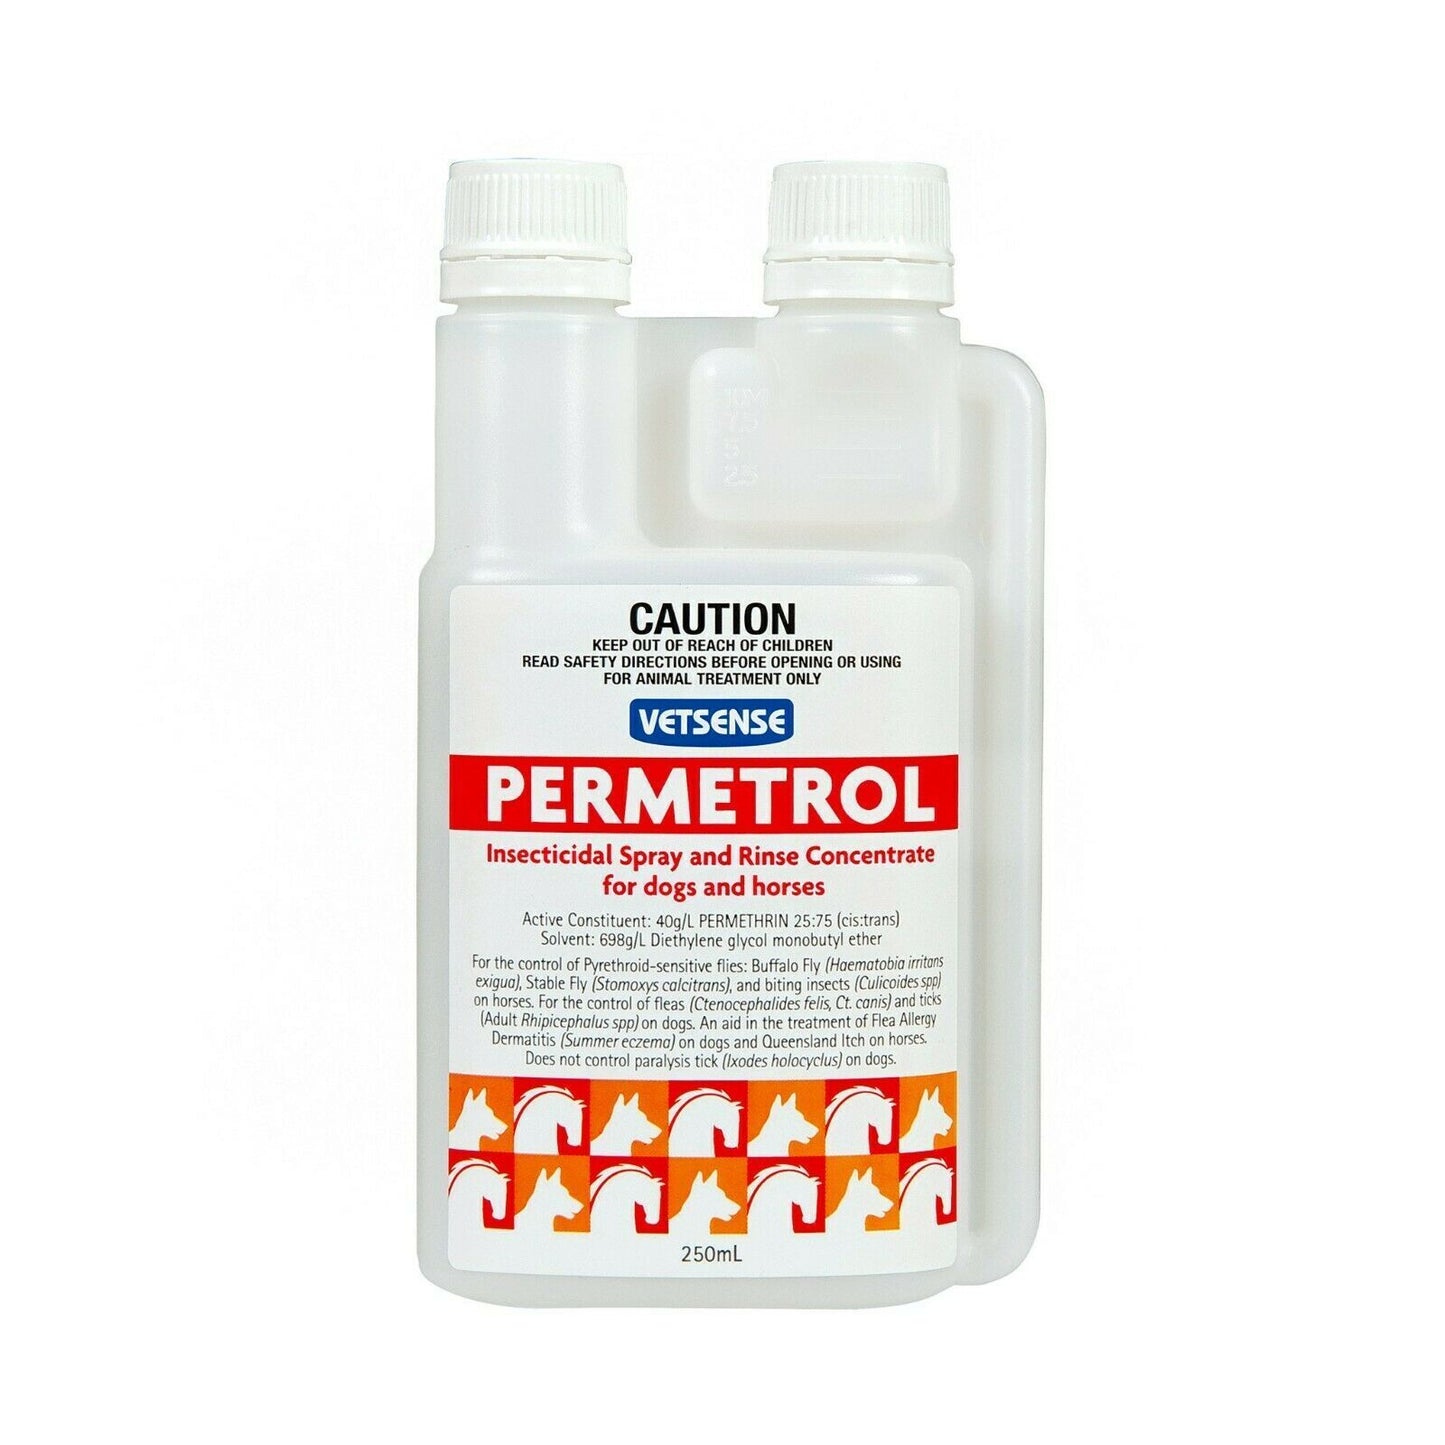 Vetsense Permetrol Insecticidal Spray Concentrate 250mL